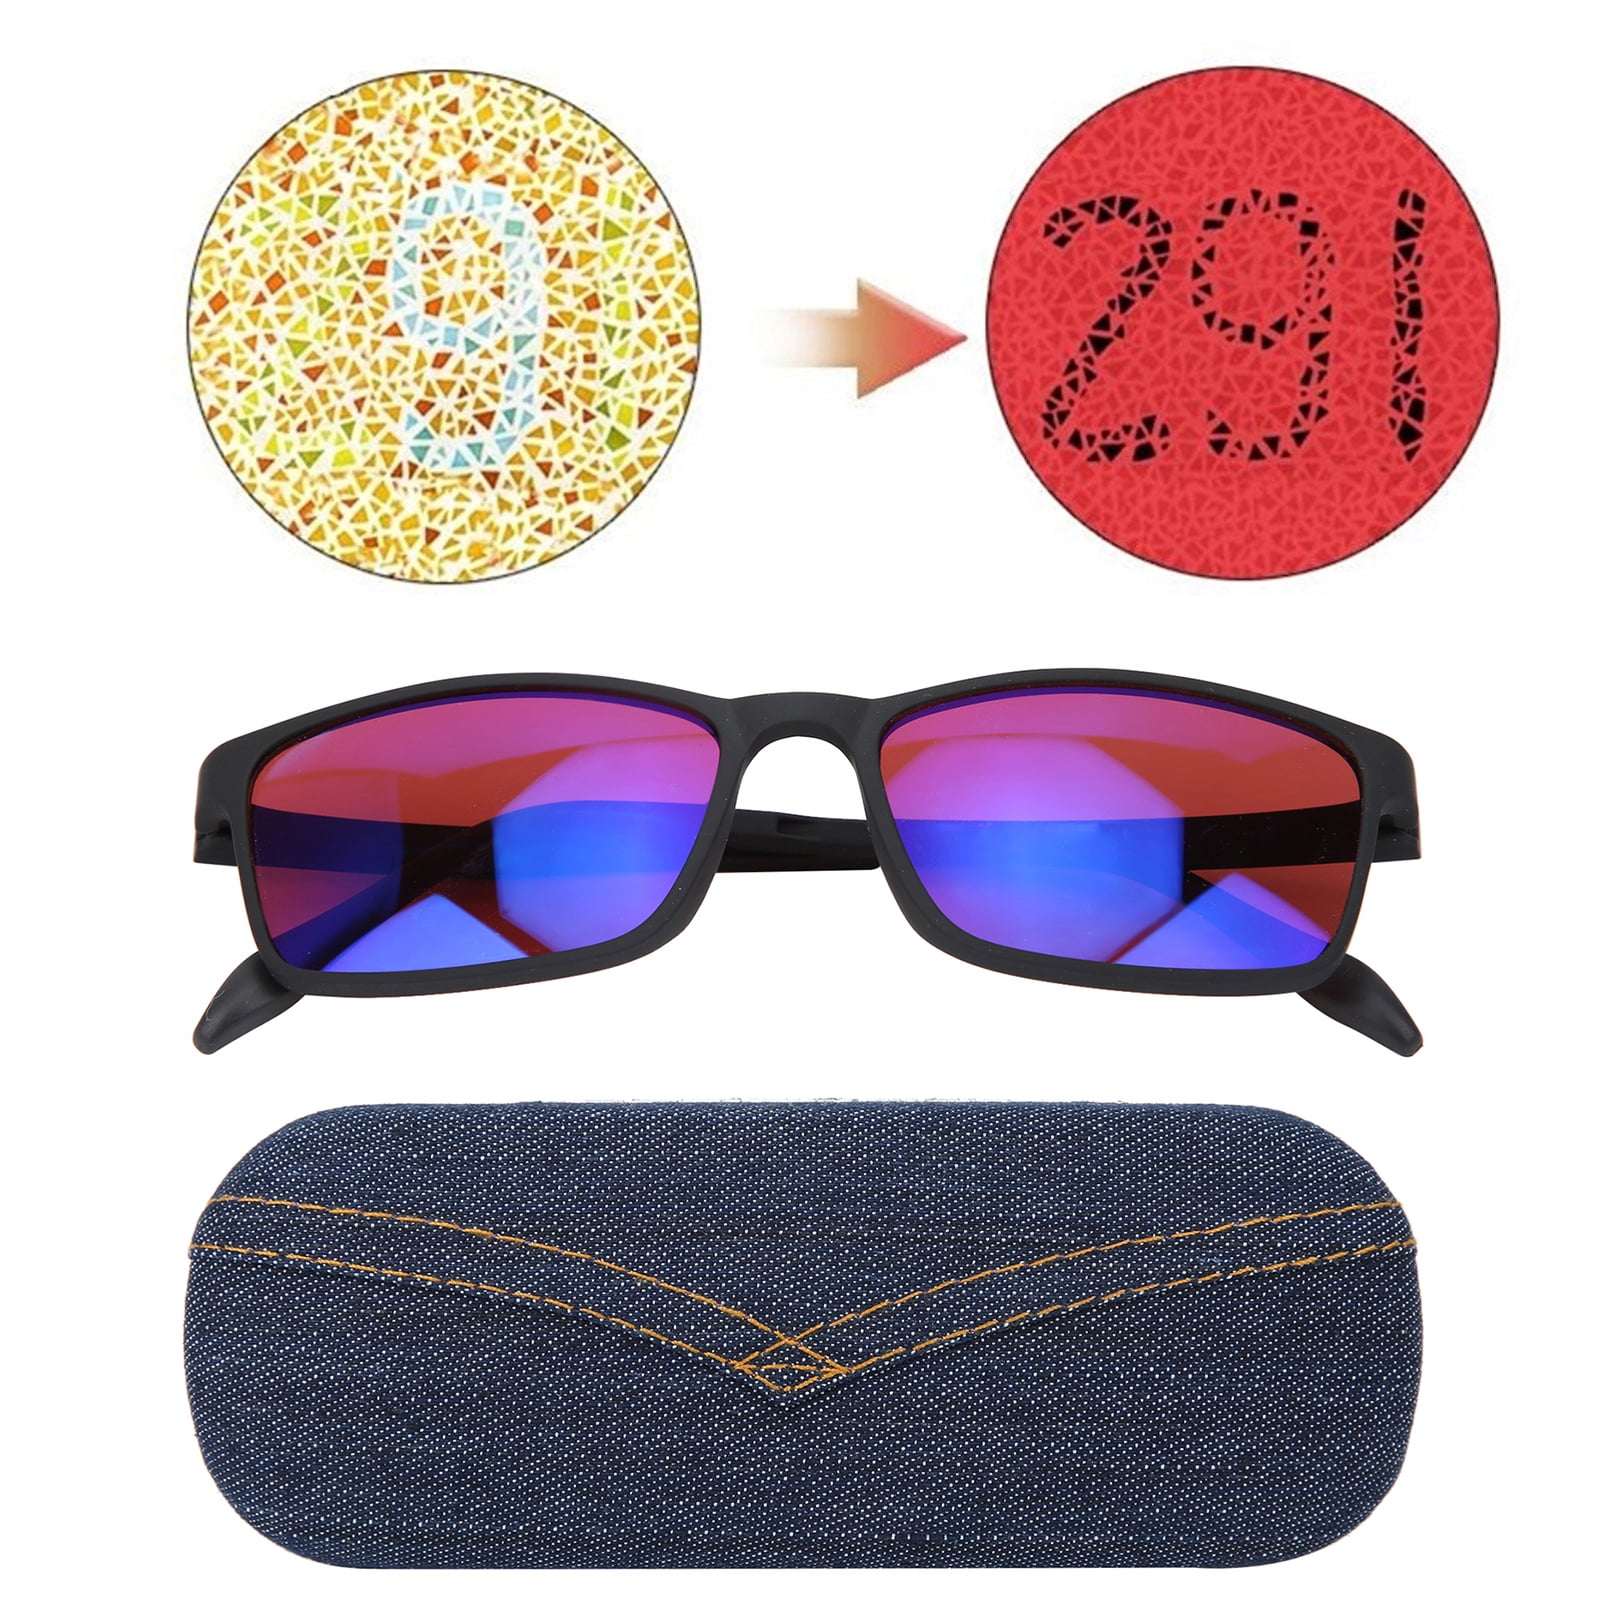 Chiciris Color Blindness Glasses Premium High Contrast Colorblind Glasses Lightweightcolor